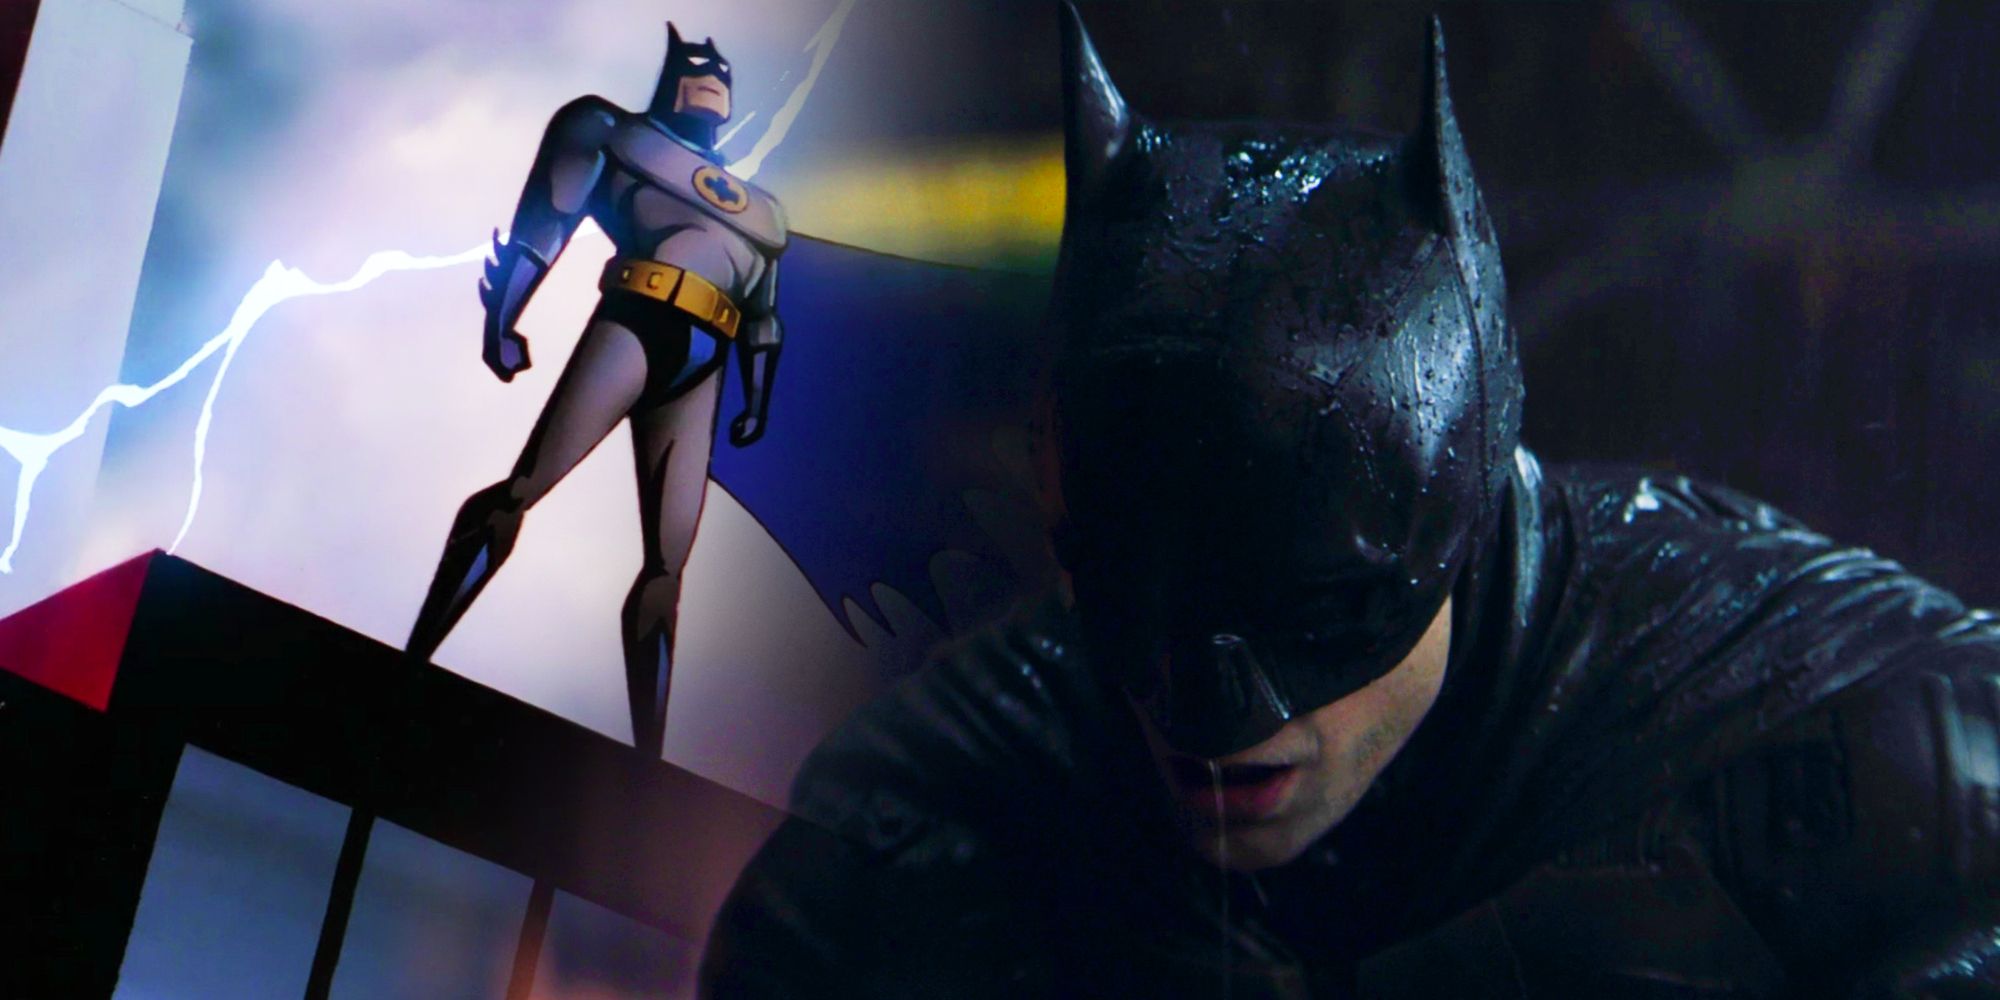 Batman the animated series alongside Robert Pattinson as Batman